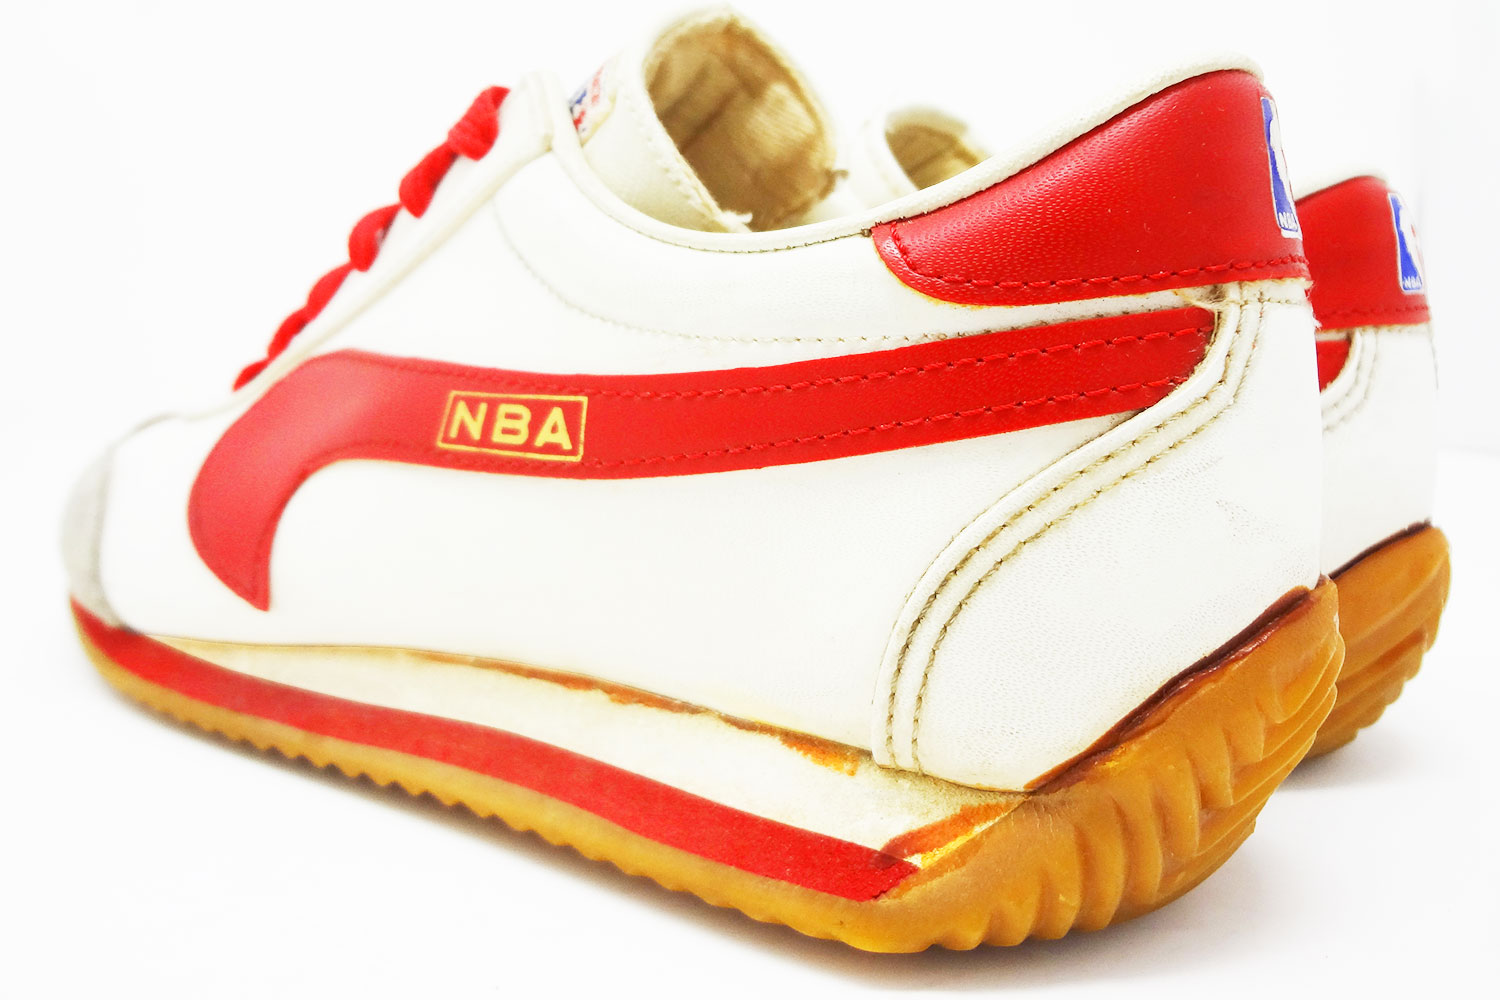 Rare Kinney NBA flipped swoosh vintage sneakers @ The Deffest